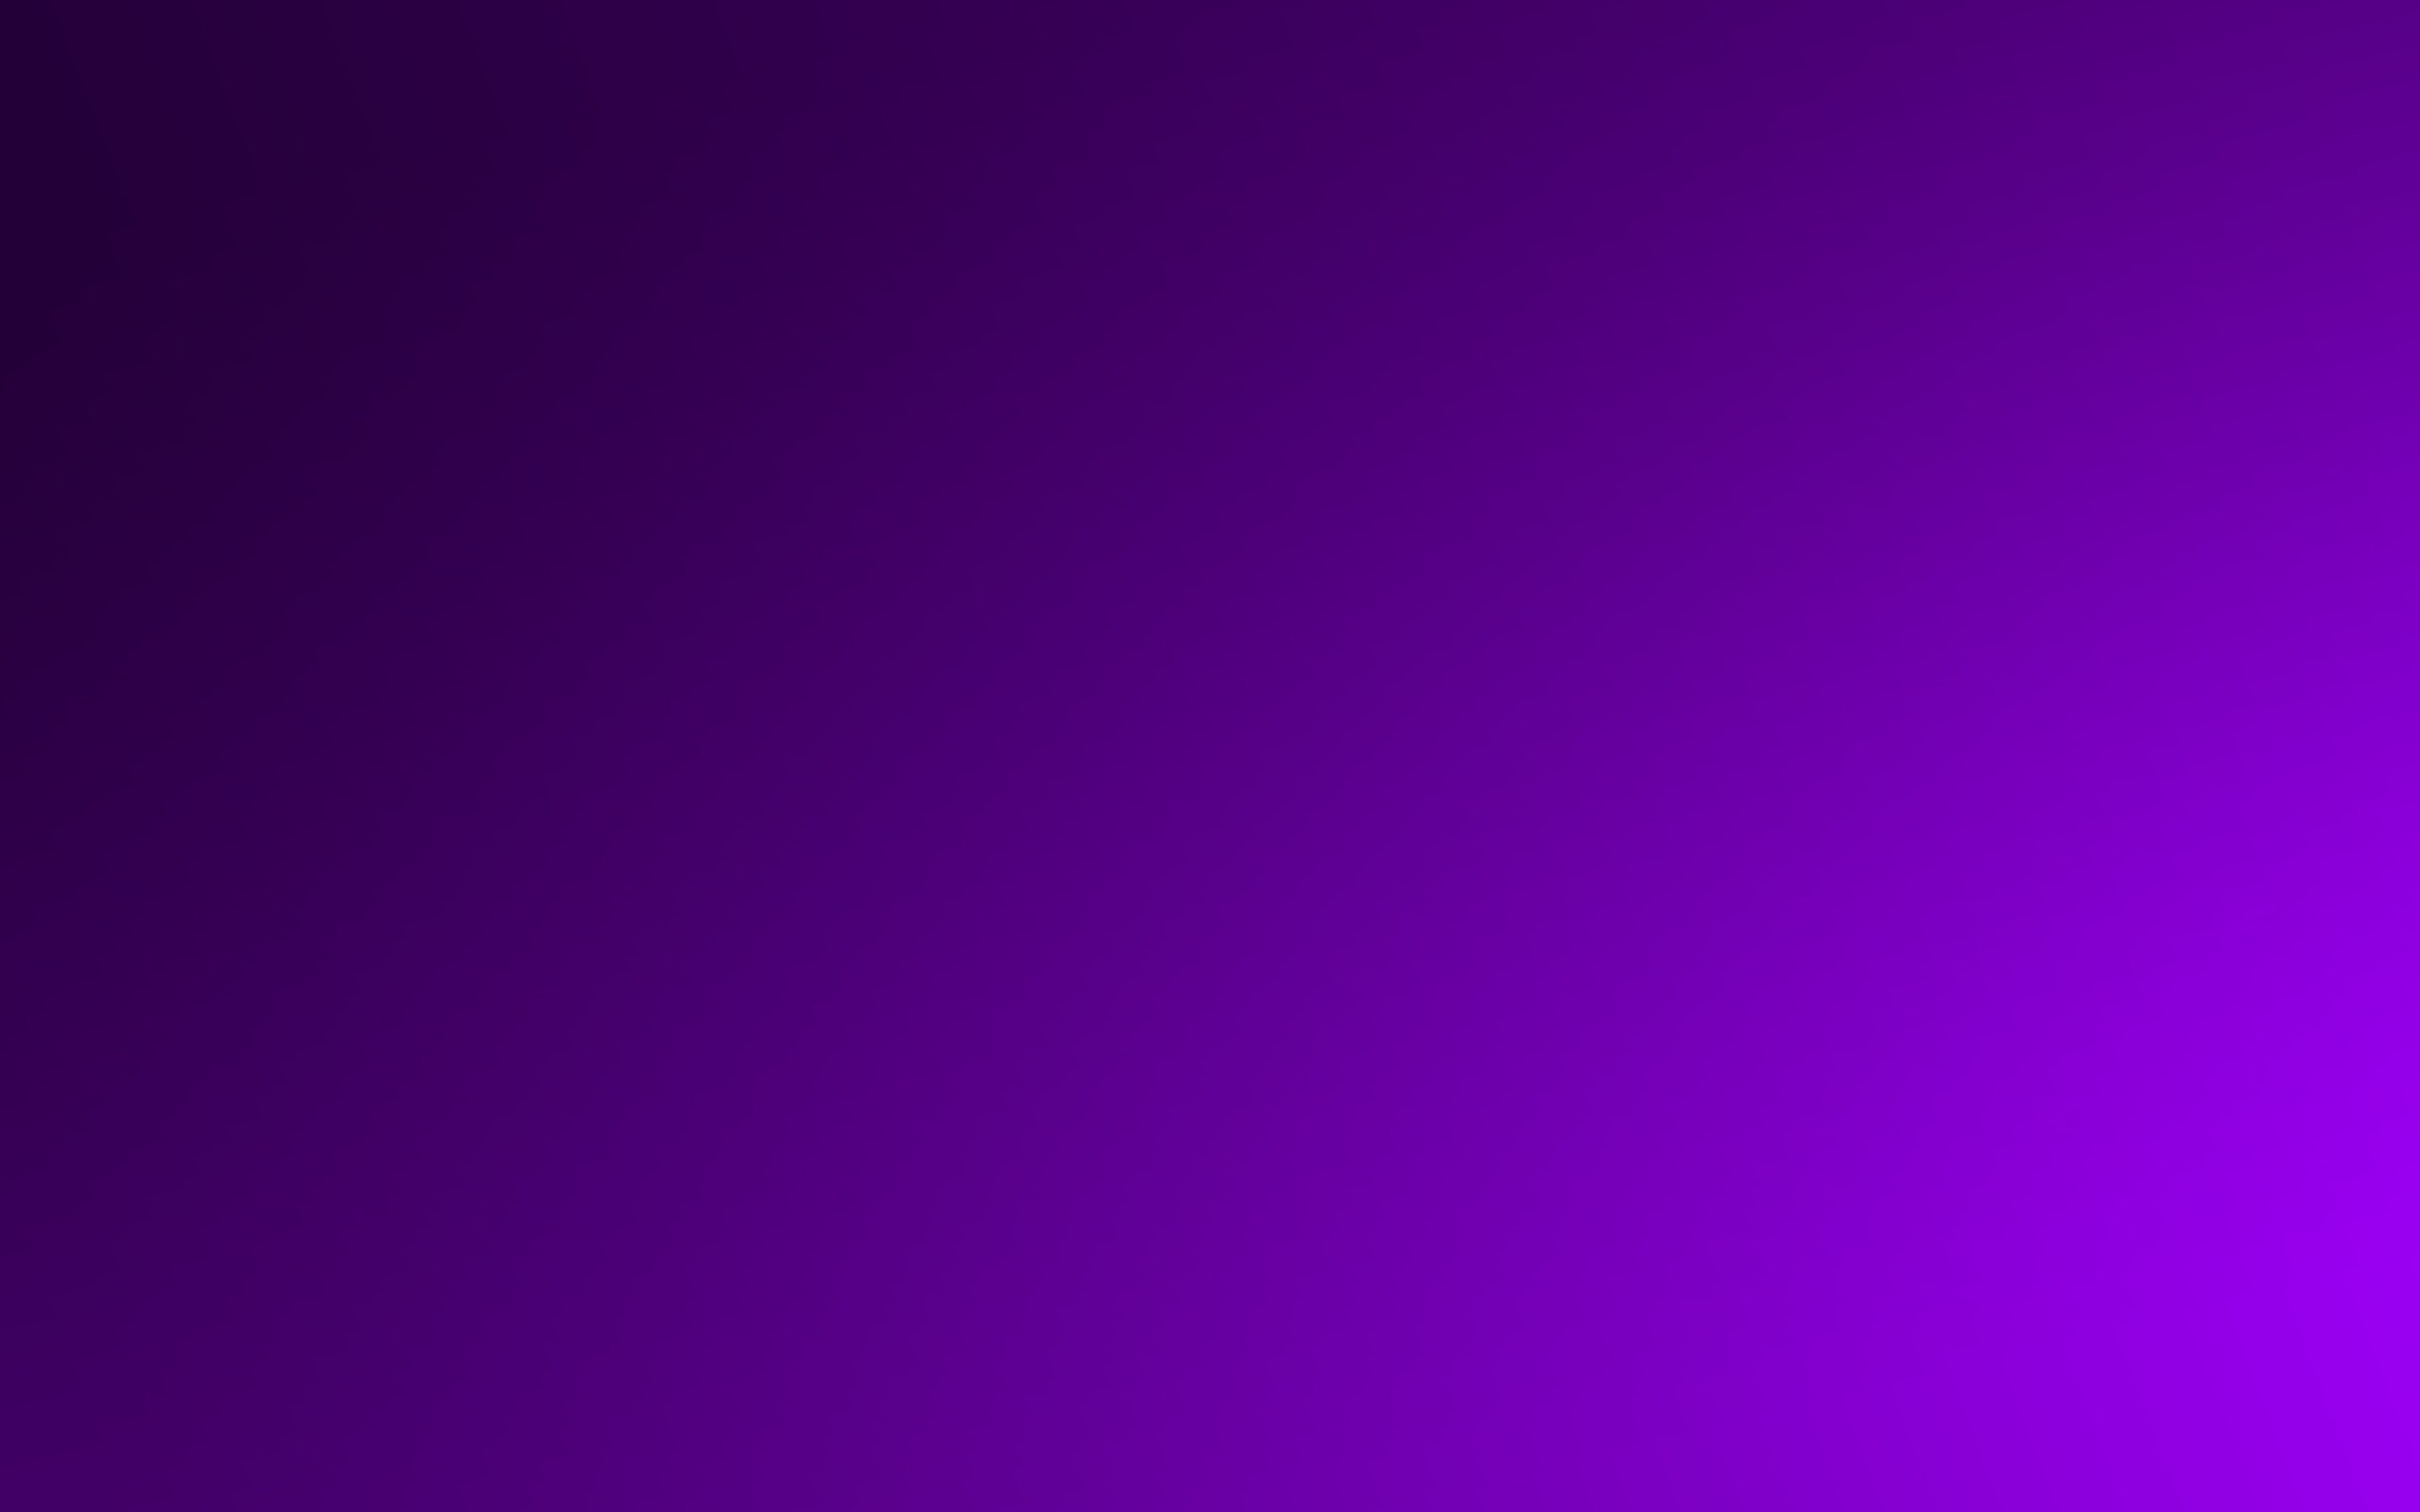 dark solid purple background desktop wallpaper images